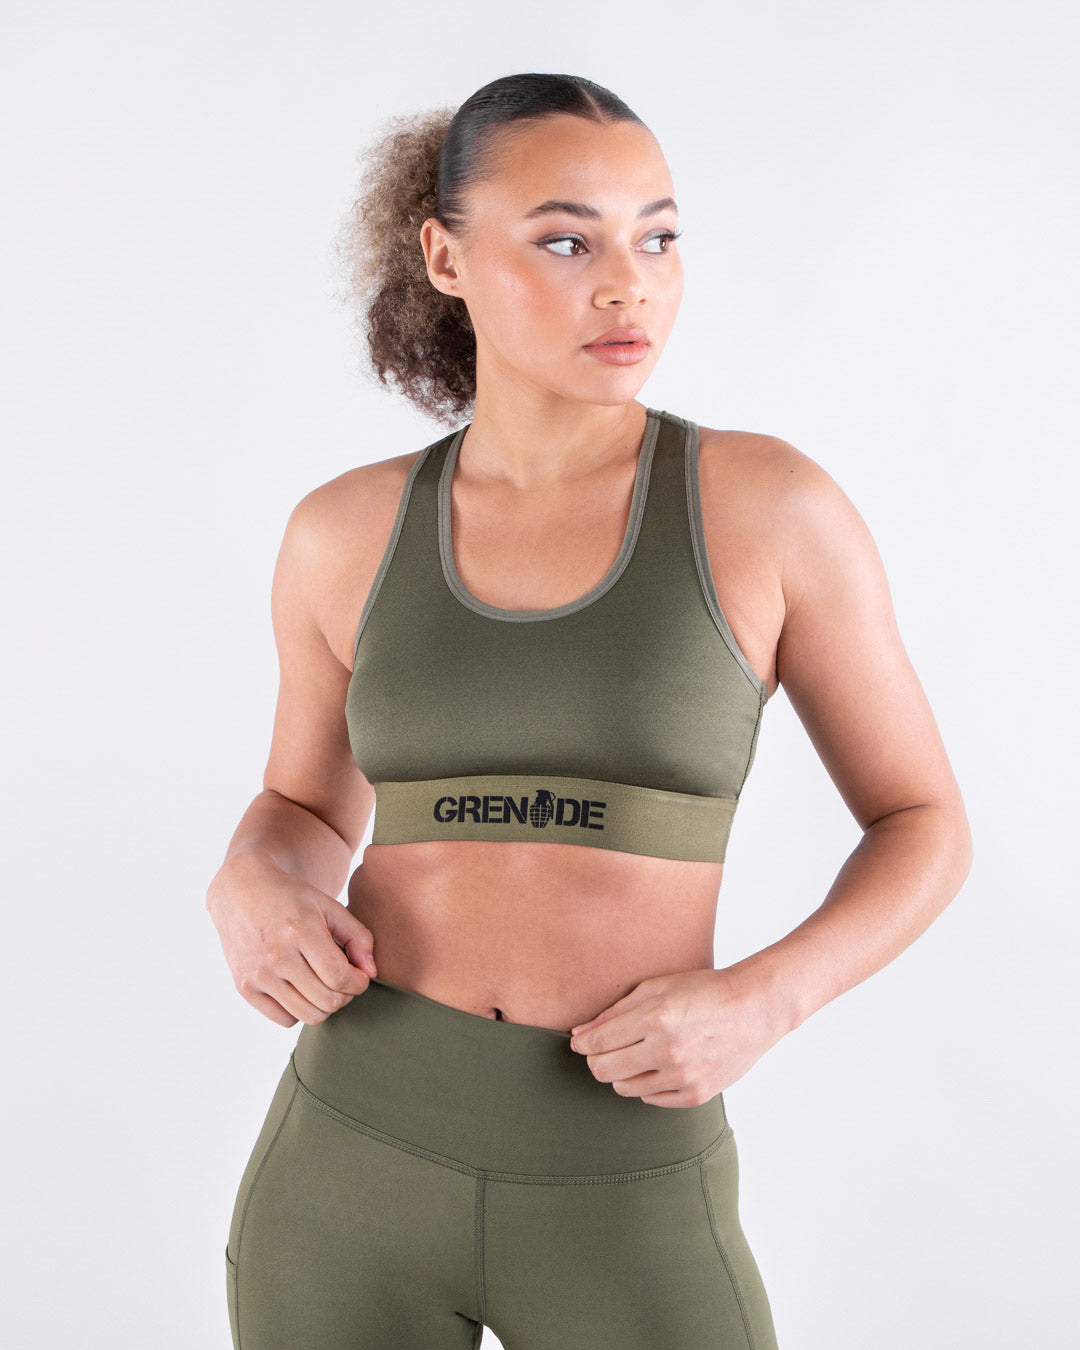 Grenade Womens Sports Bra - Recruit Army Green